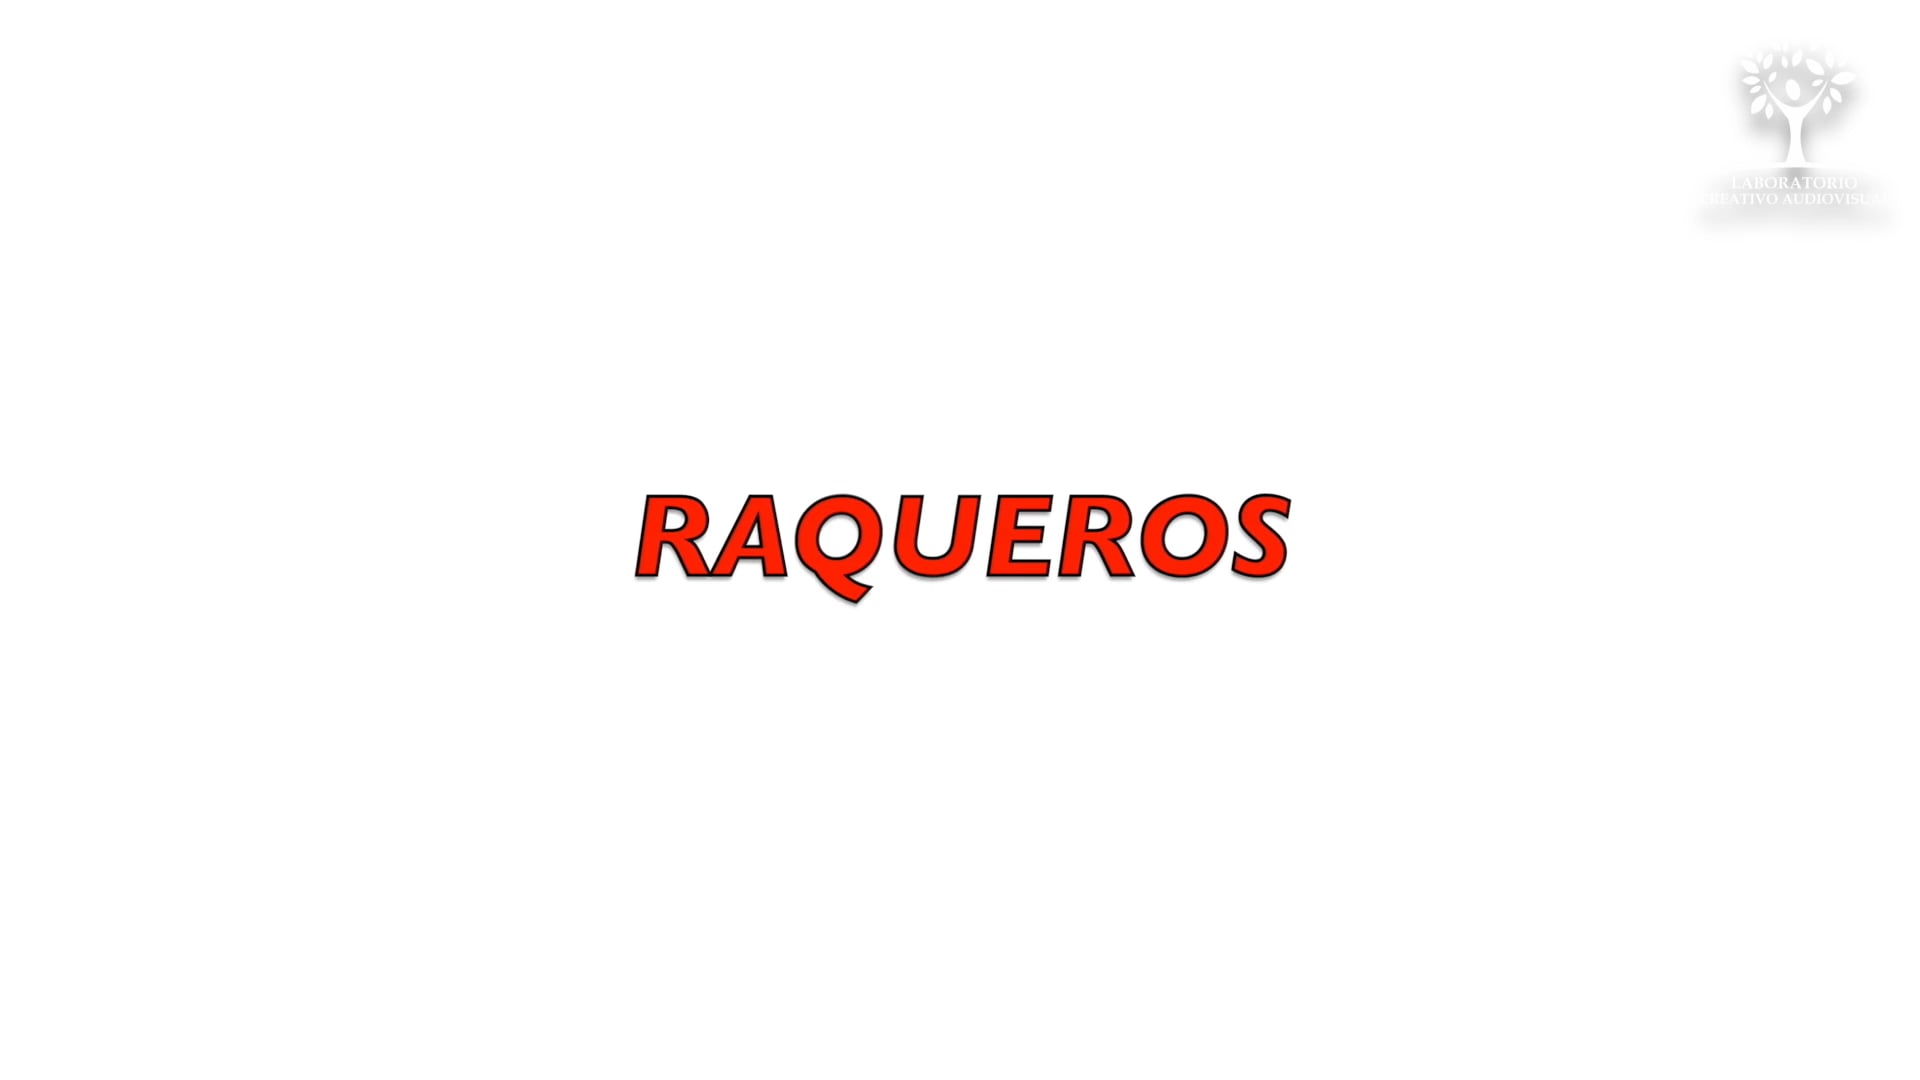 RAQUEROS, Programa de humor. Alumnos/as Curso de Cine & Tv